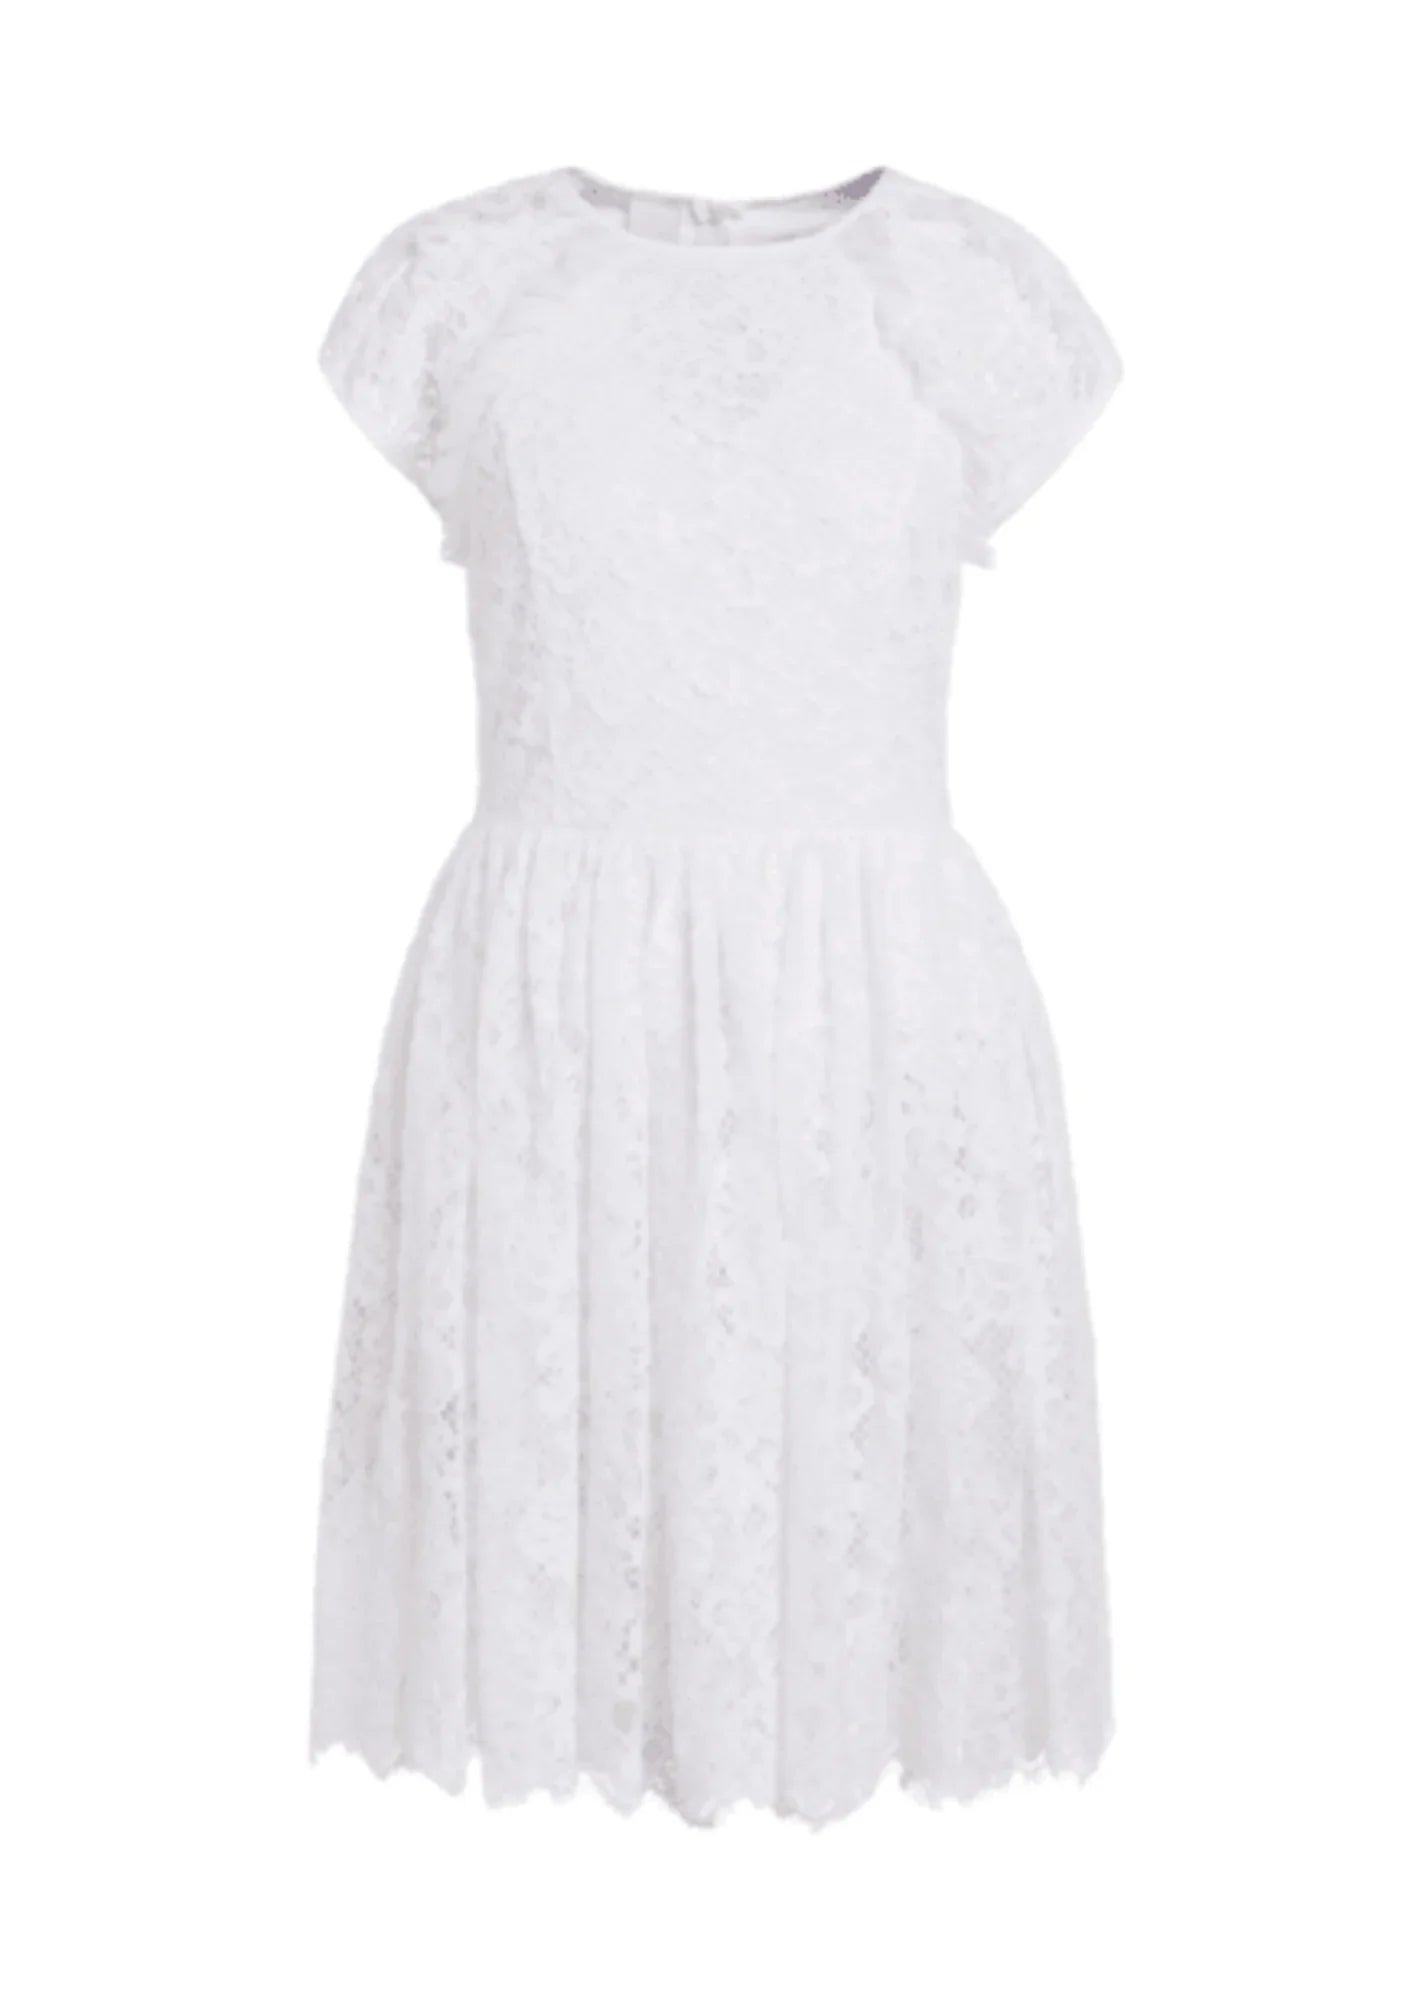 Mini-robe en dentelle blanche